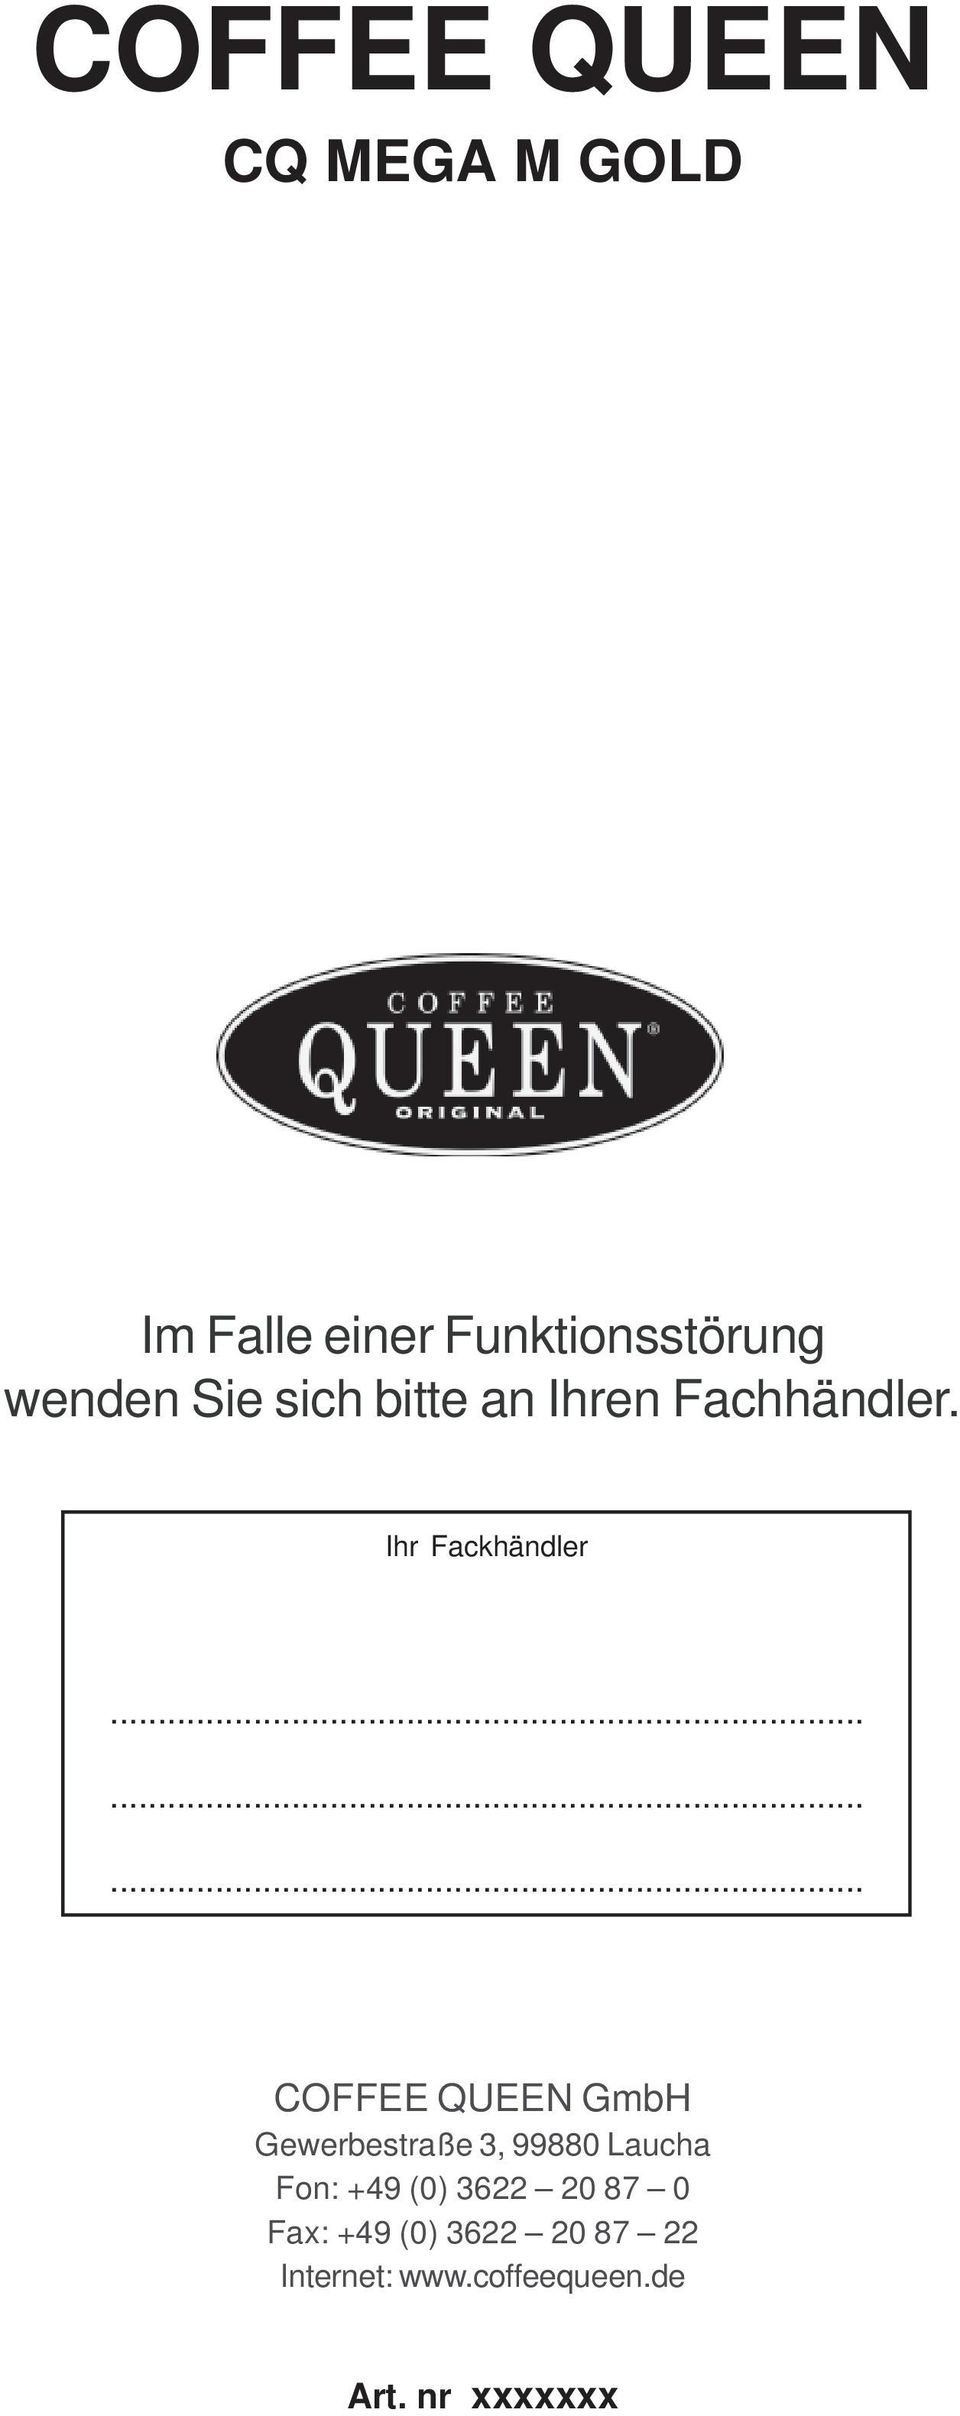 ........ COFFEE QUEEN GmbH Gewerbestraße 3, 99880 Laucha Fon: +49